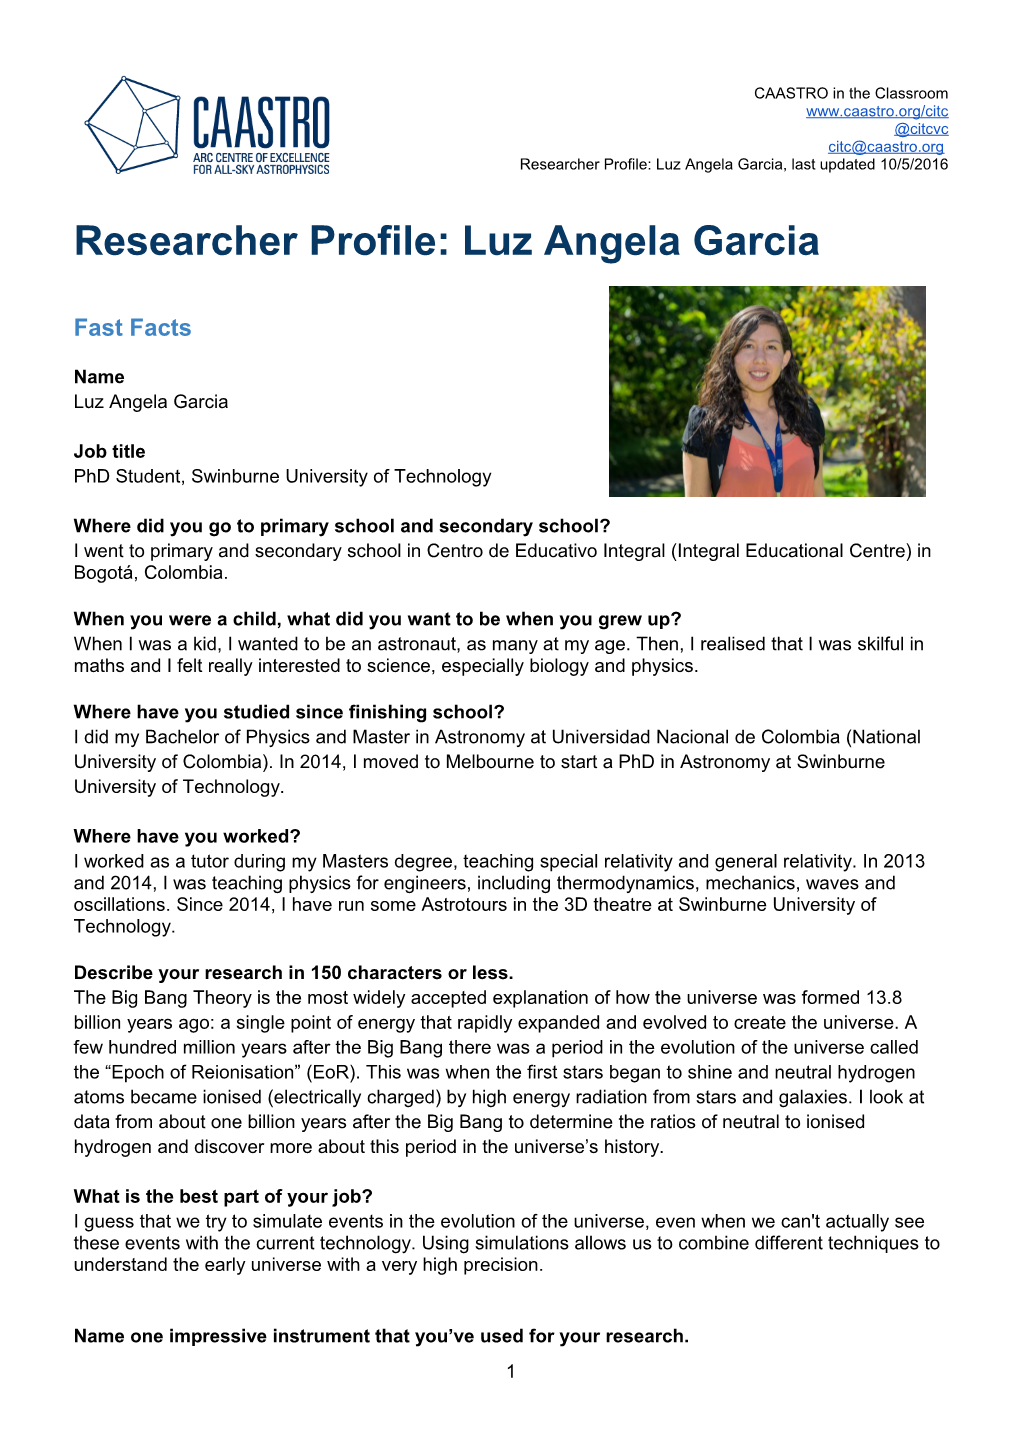 Researcher Profile: Luz Angela Garcia, Last Updated 10/5/2016